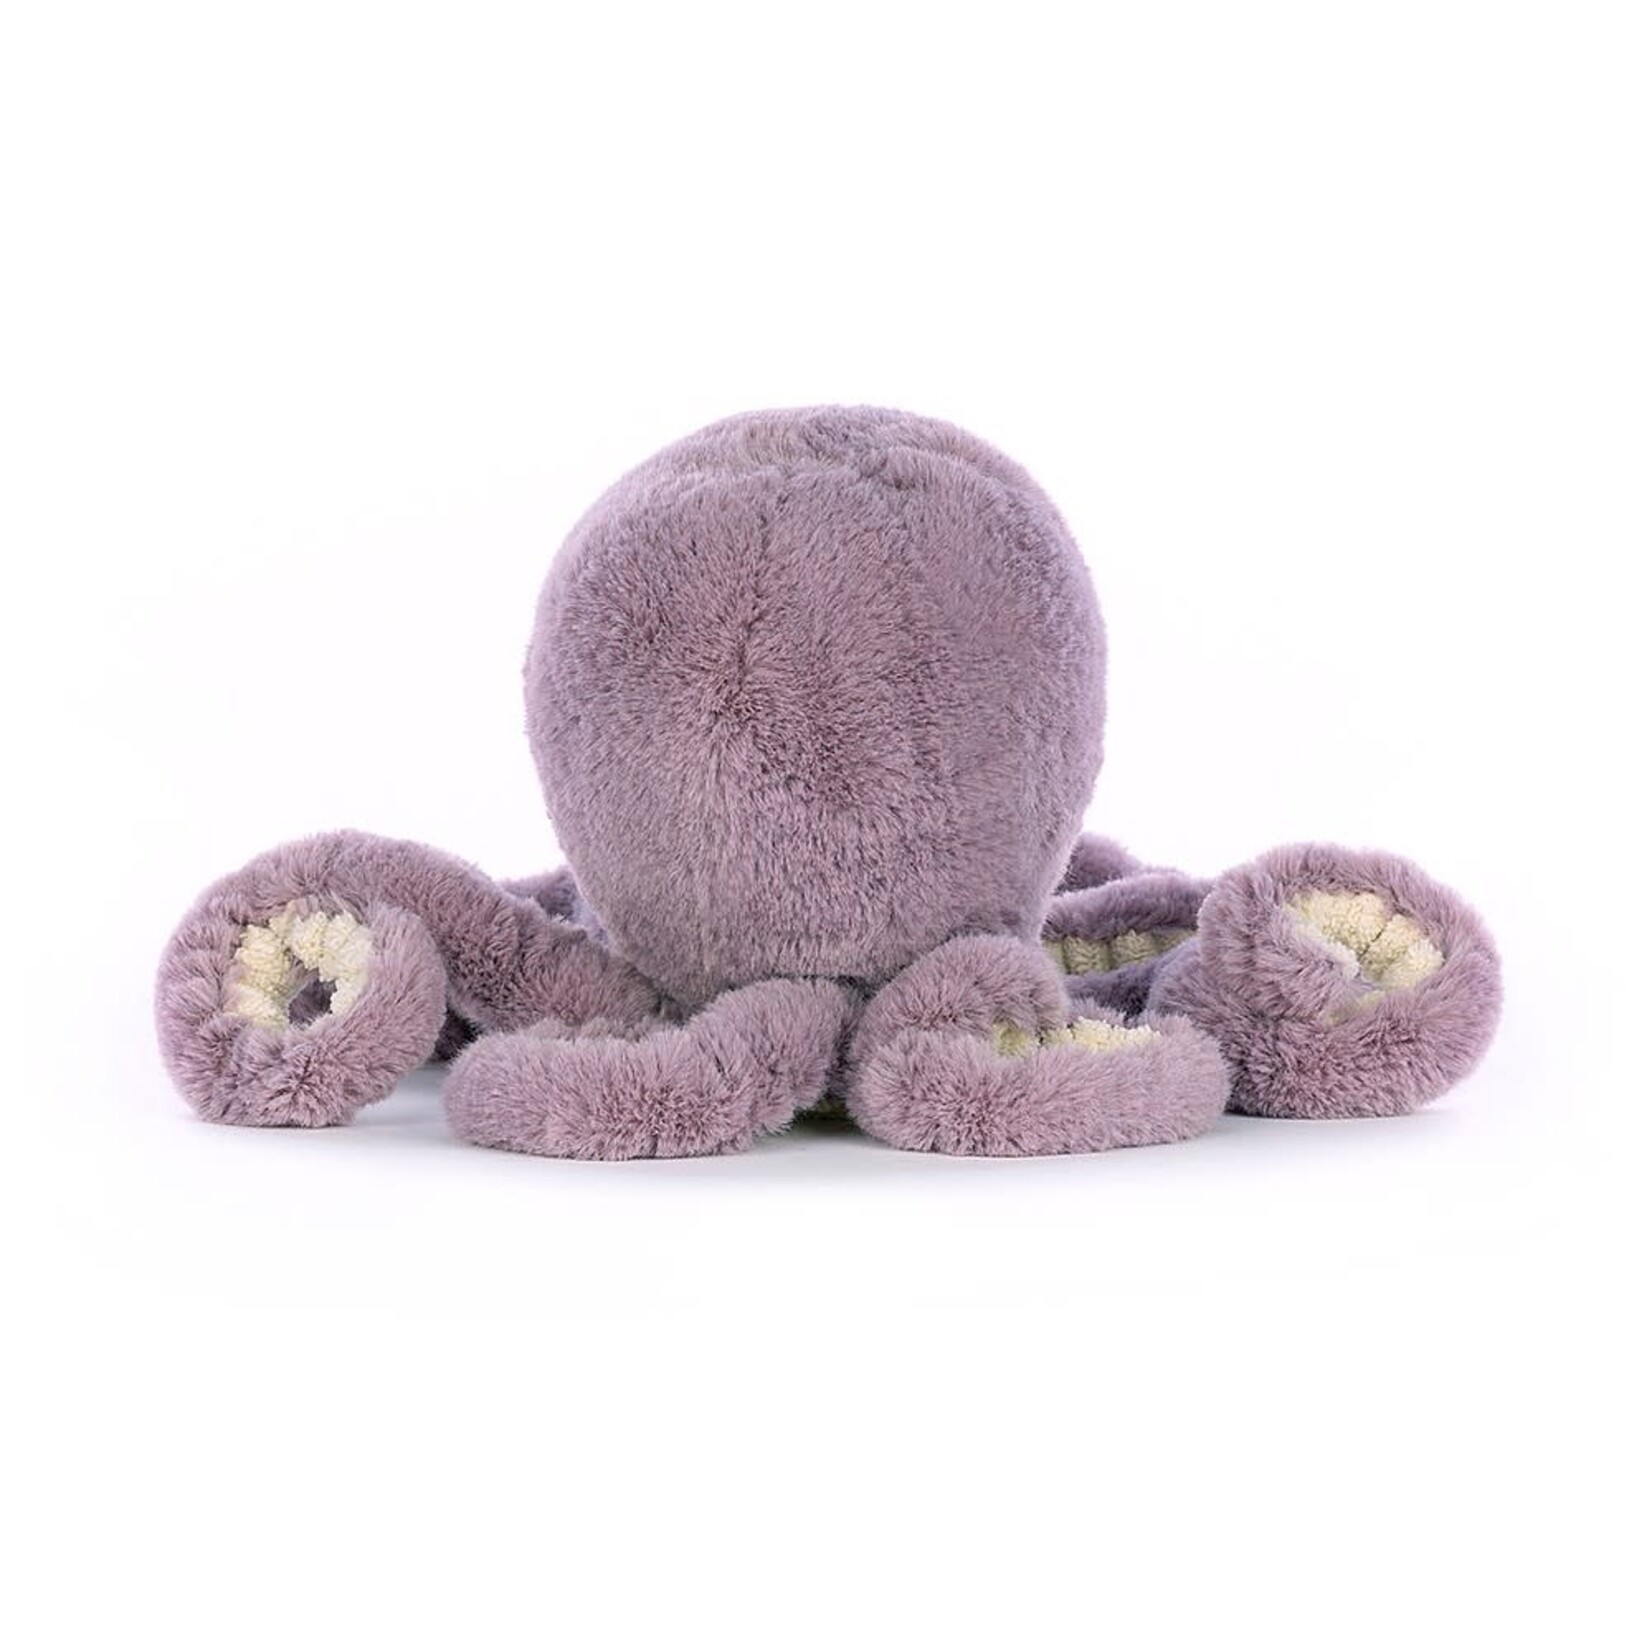 Jellycat JELLYCAT - Maya Octopus Plush in Mauve - Small